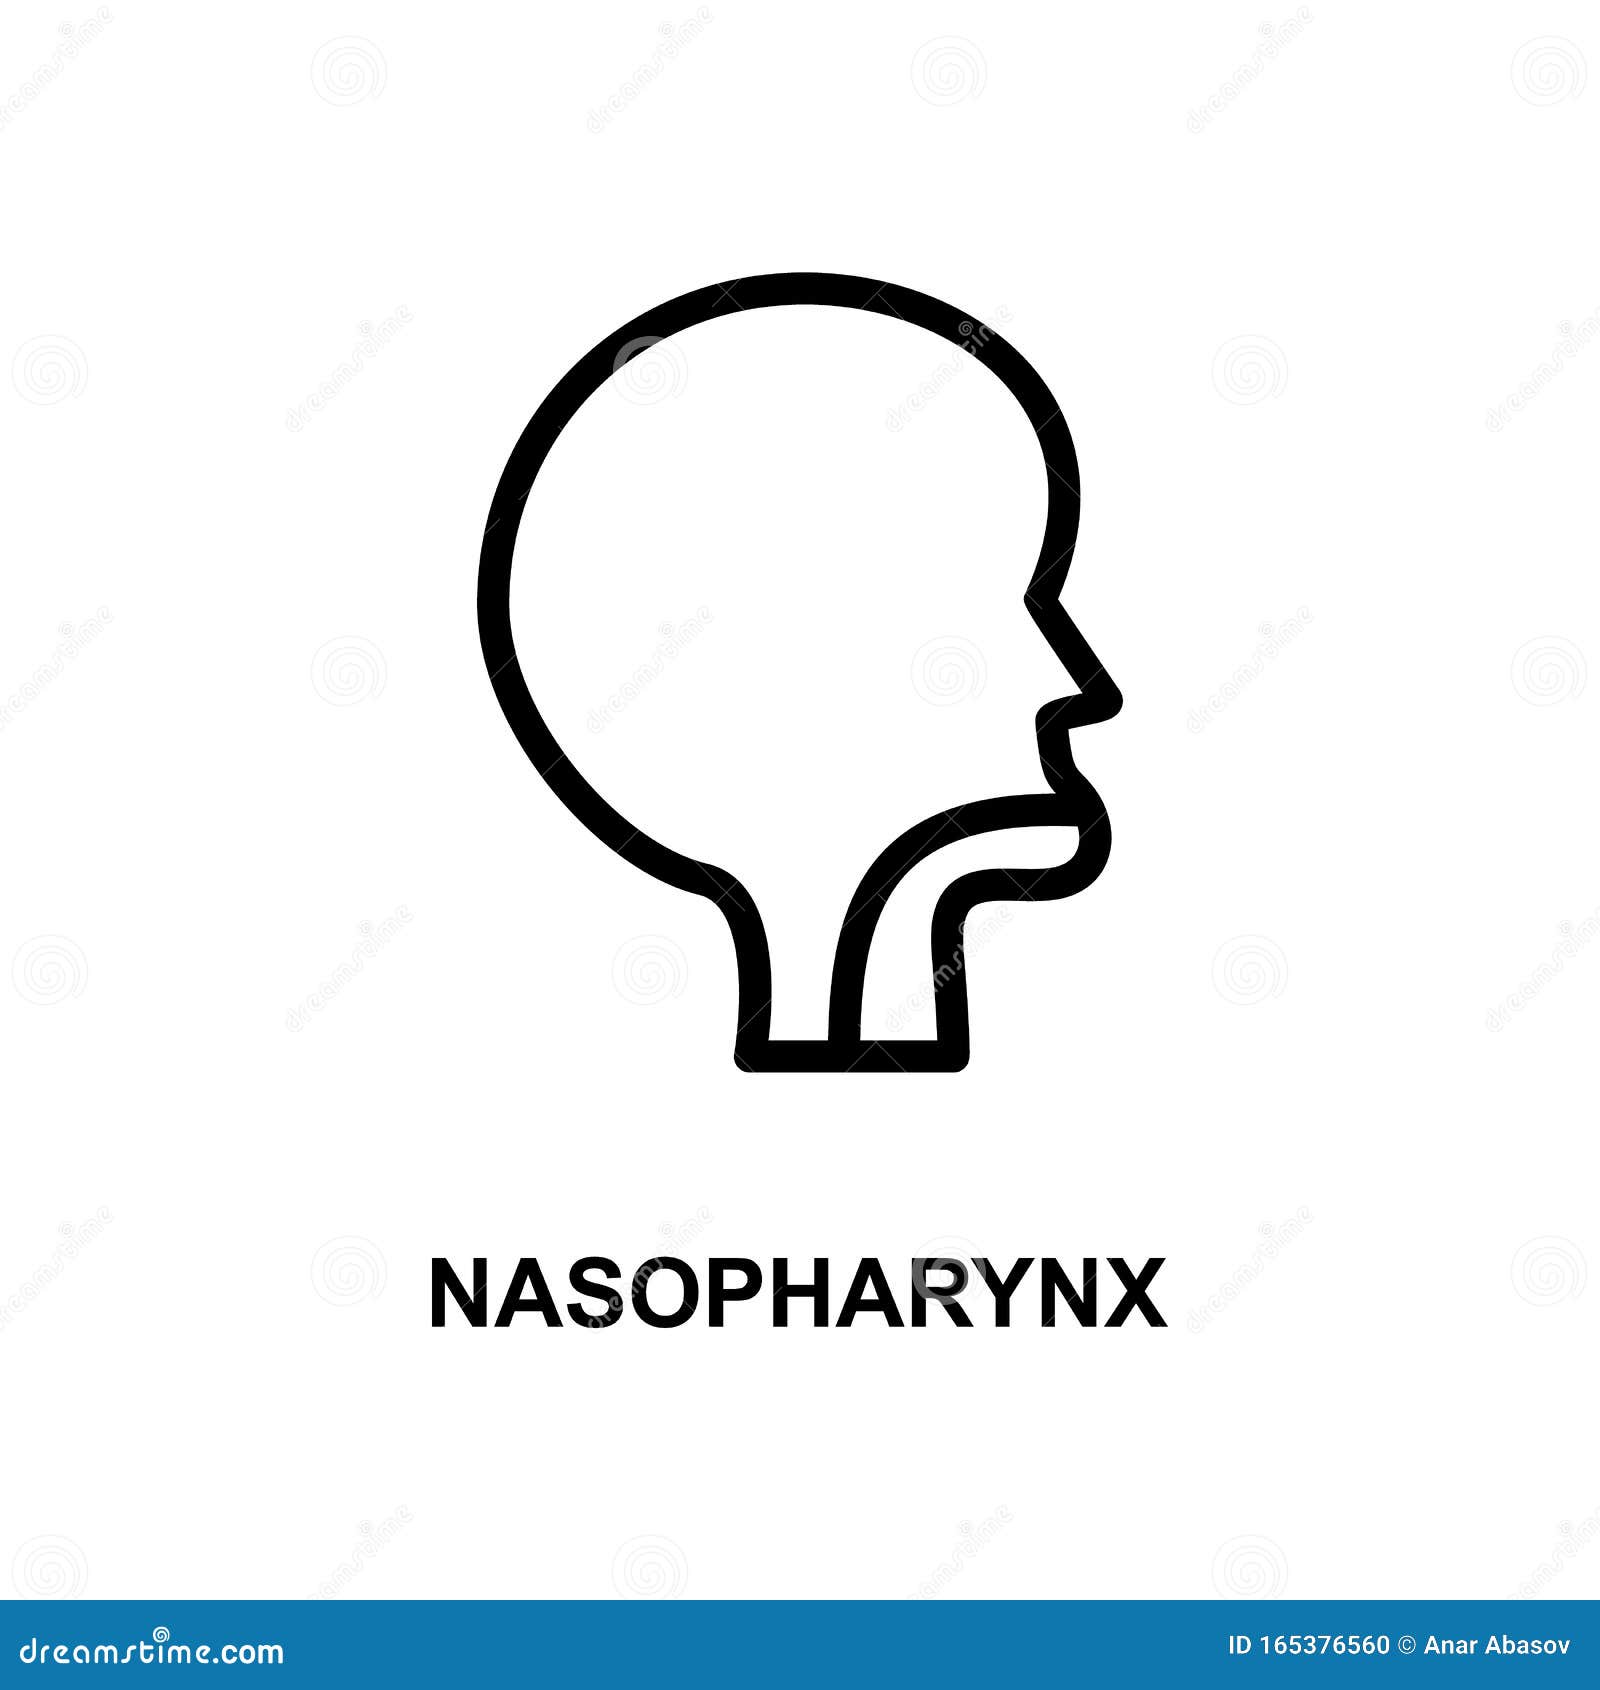 nasopharynx simple line icon